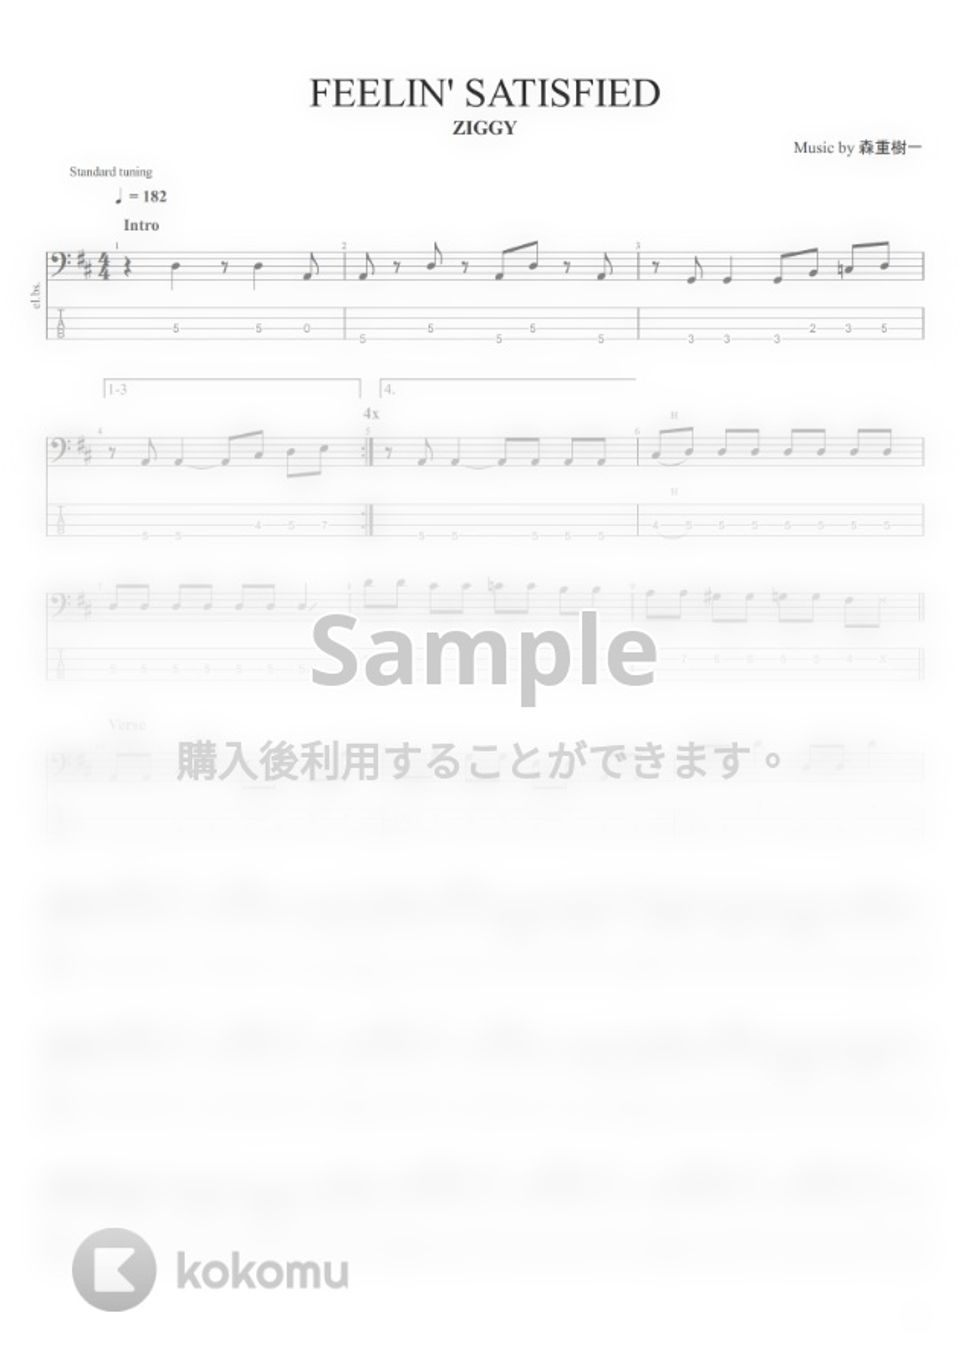 ZIGGY - ZIGGY楽譜集 (15曲) by まっきん